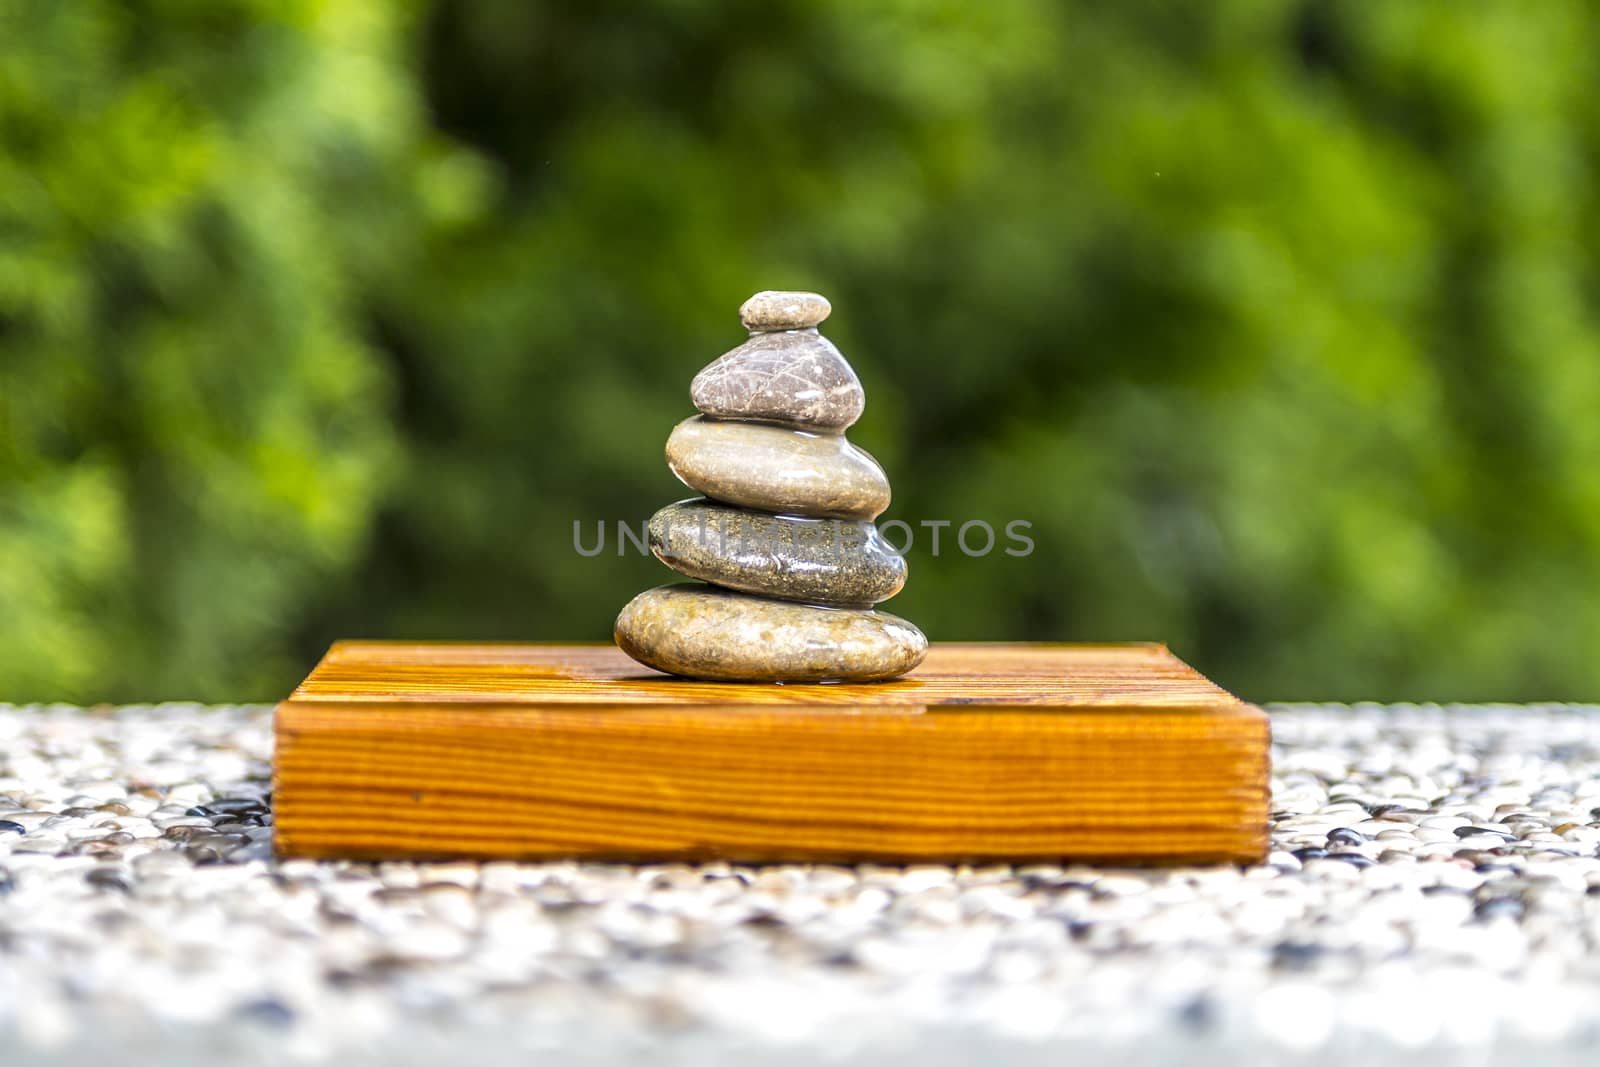 Wet zen stones on wood with green background